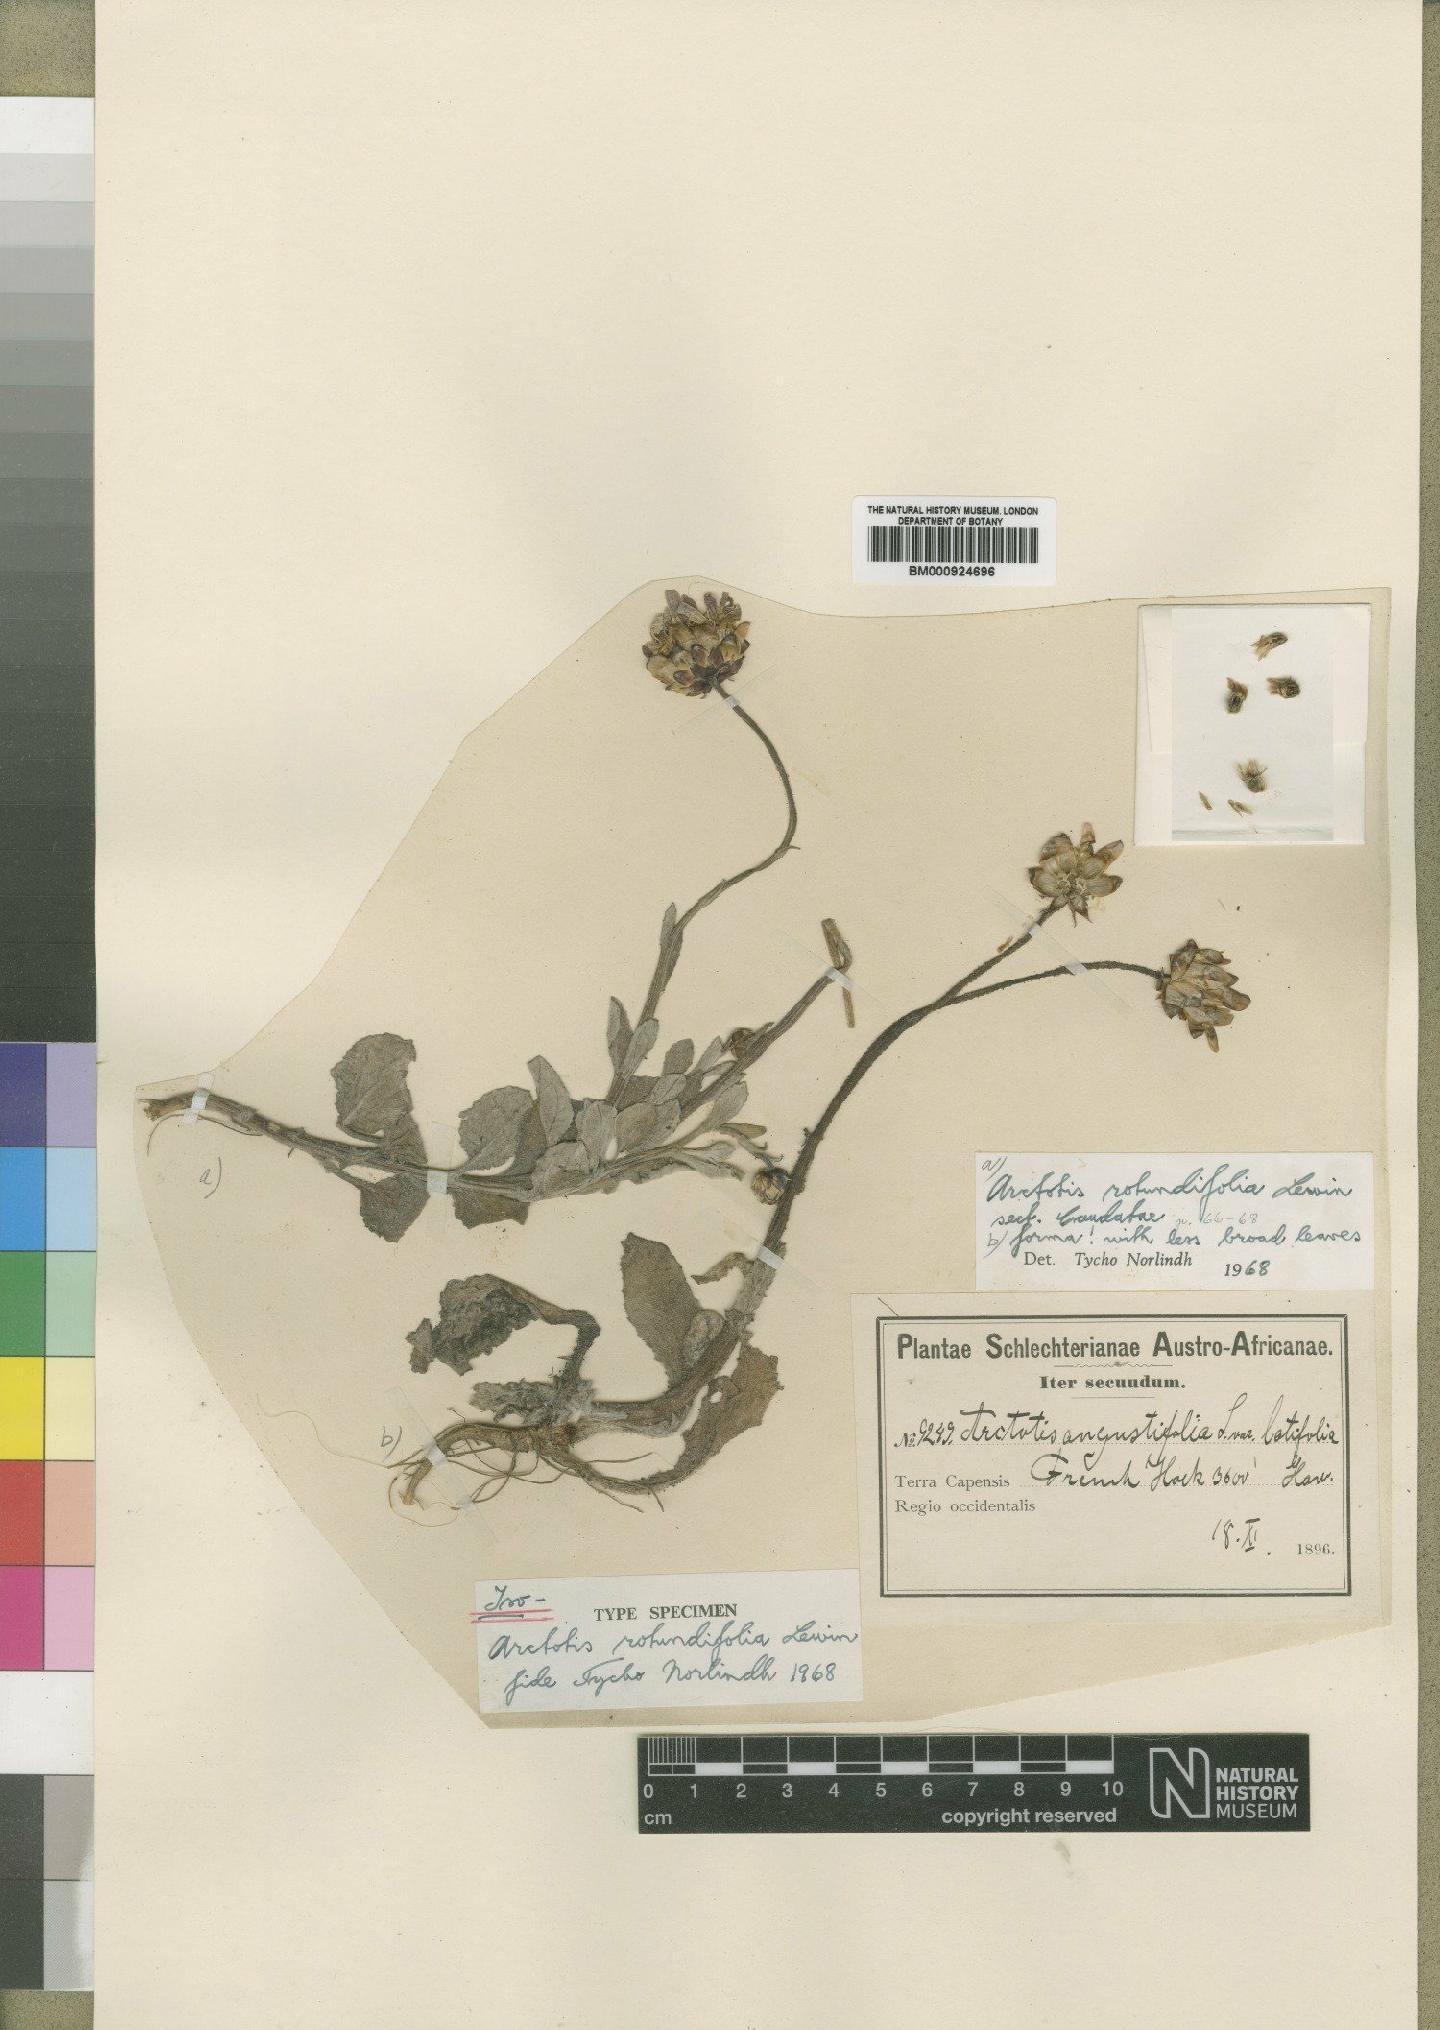 To NHMUK collection (Arctotis rotundifolia Lewin; Isotype; NHMUK:ecatalogue:4553310)